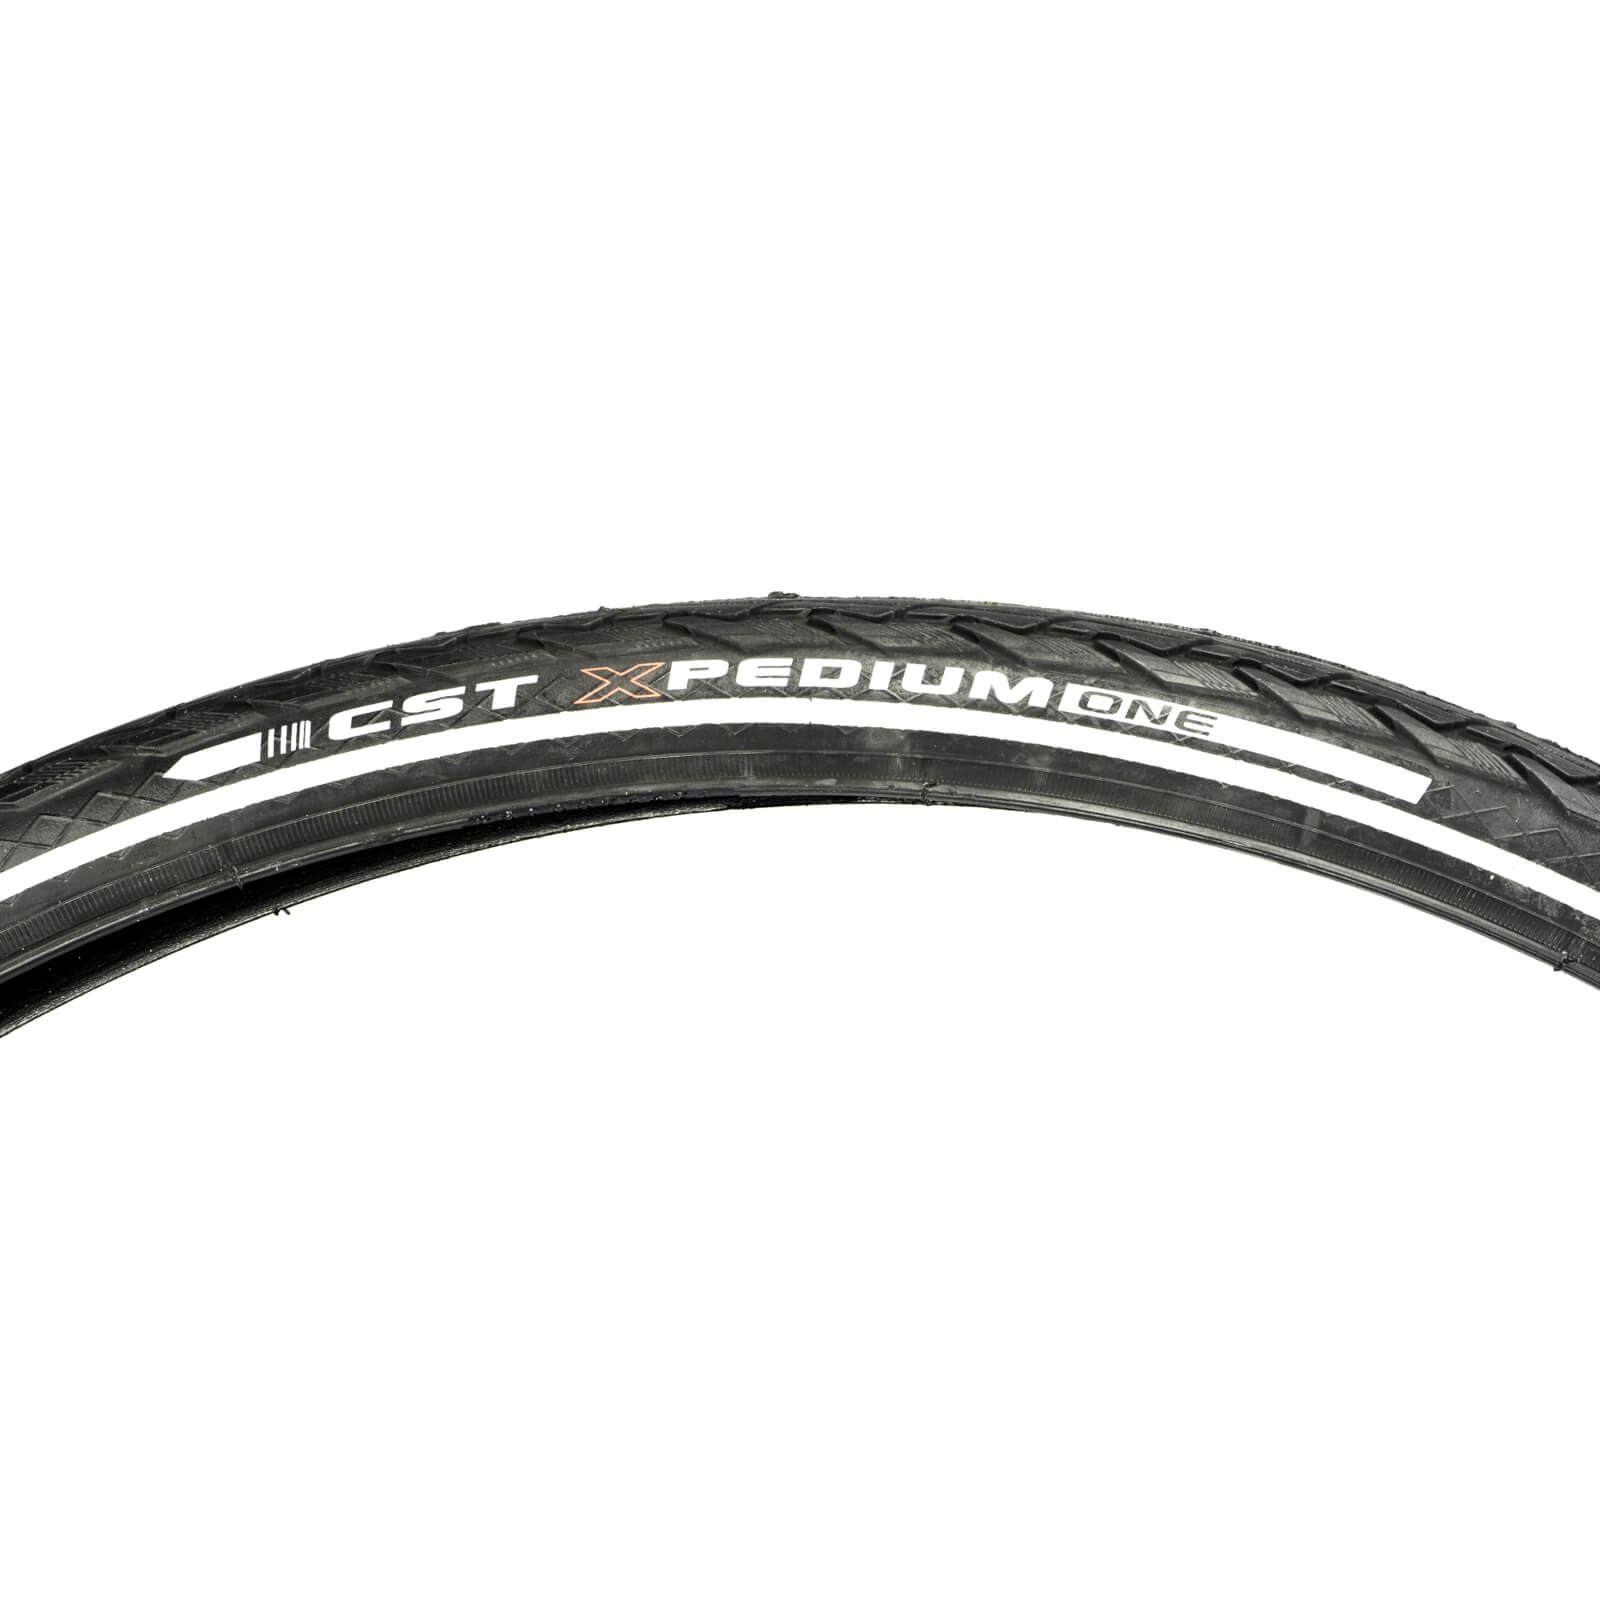 CST Xpedium Level 1 Single Compound Wire APL 700c Clincher Bike Tyre 700x35c